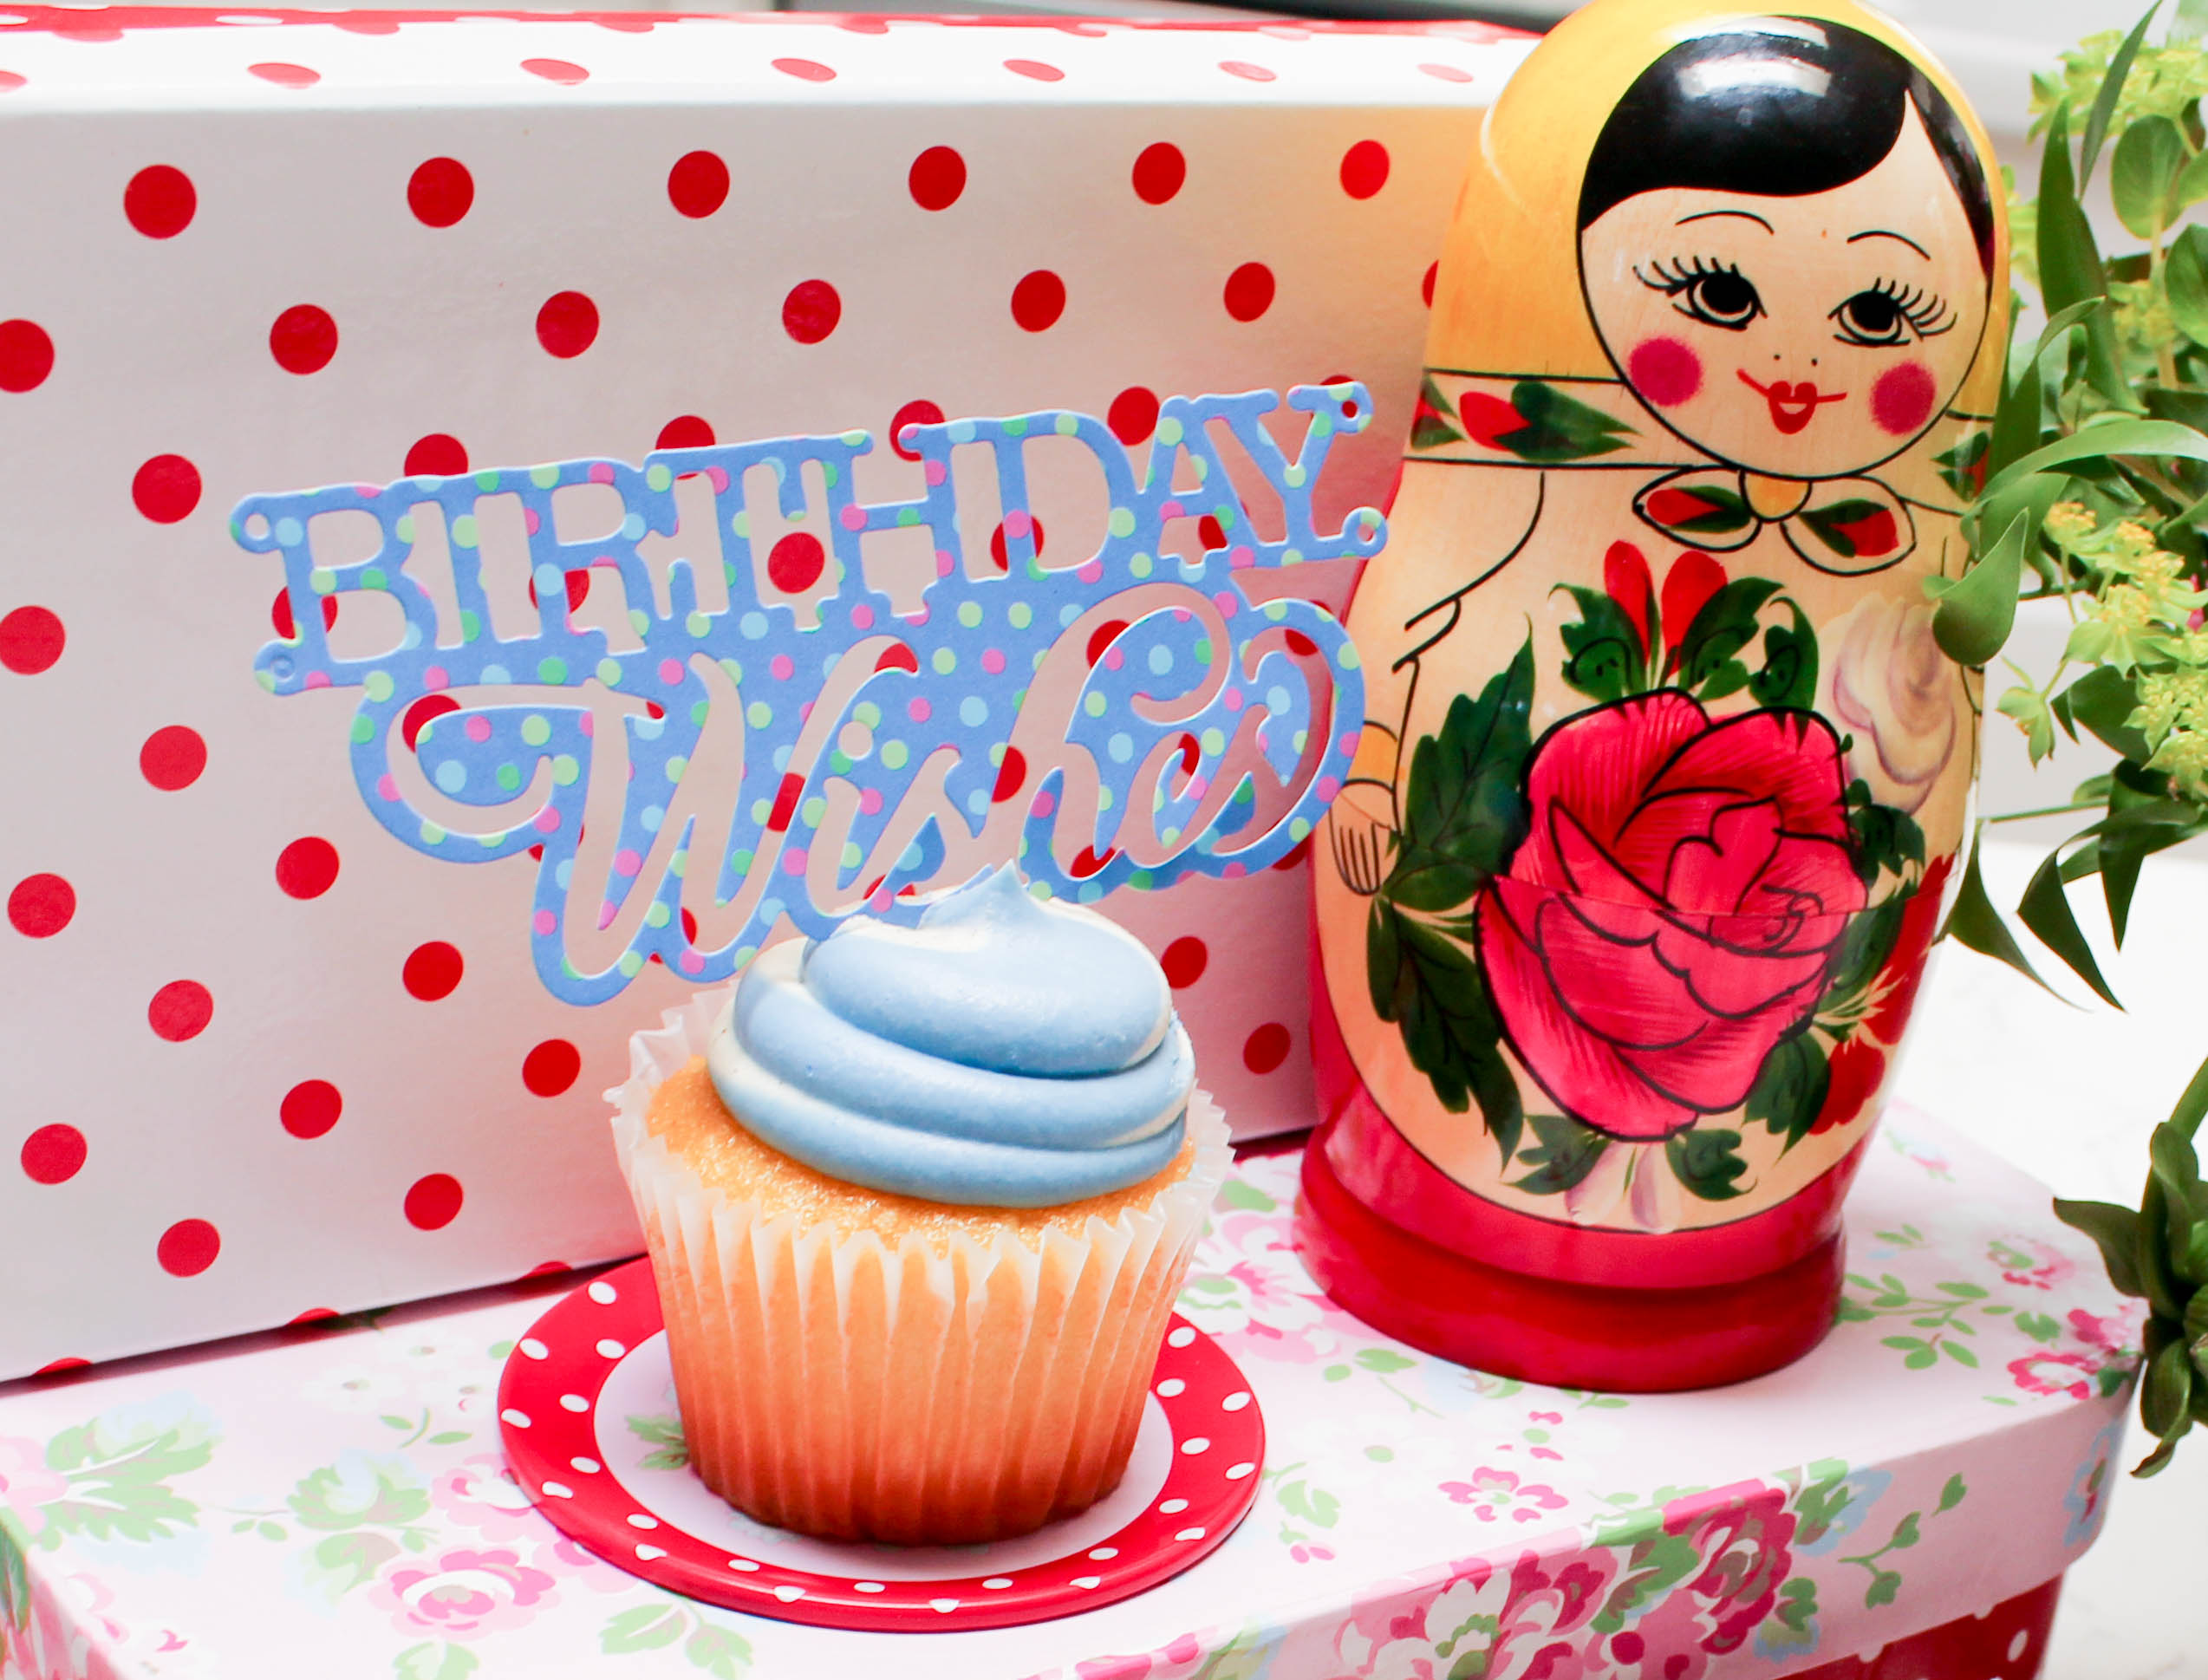 matroyshka nesting dolls where women cook sizzix dies birthday wishes cake topper-14